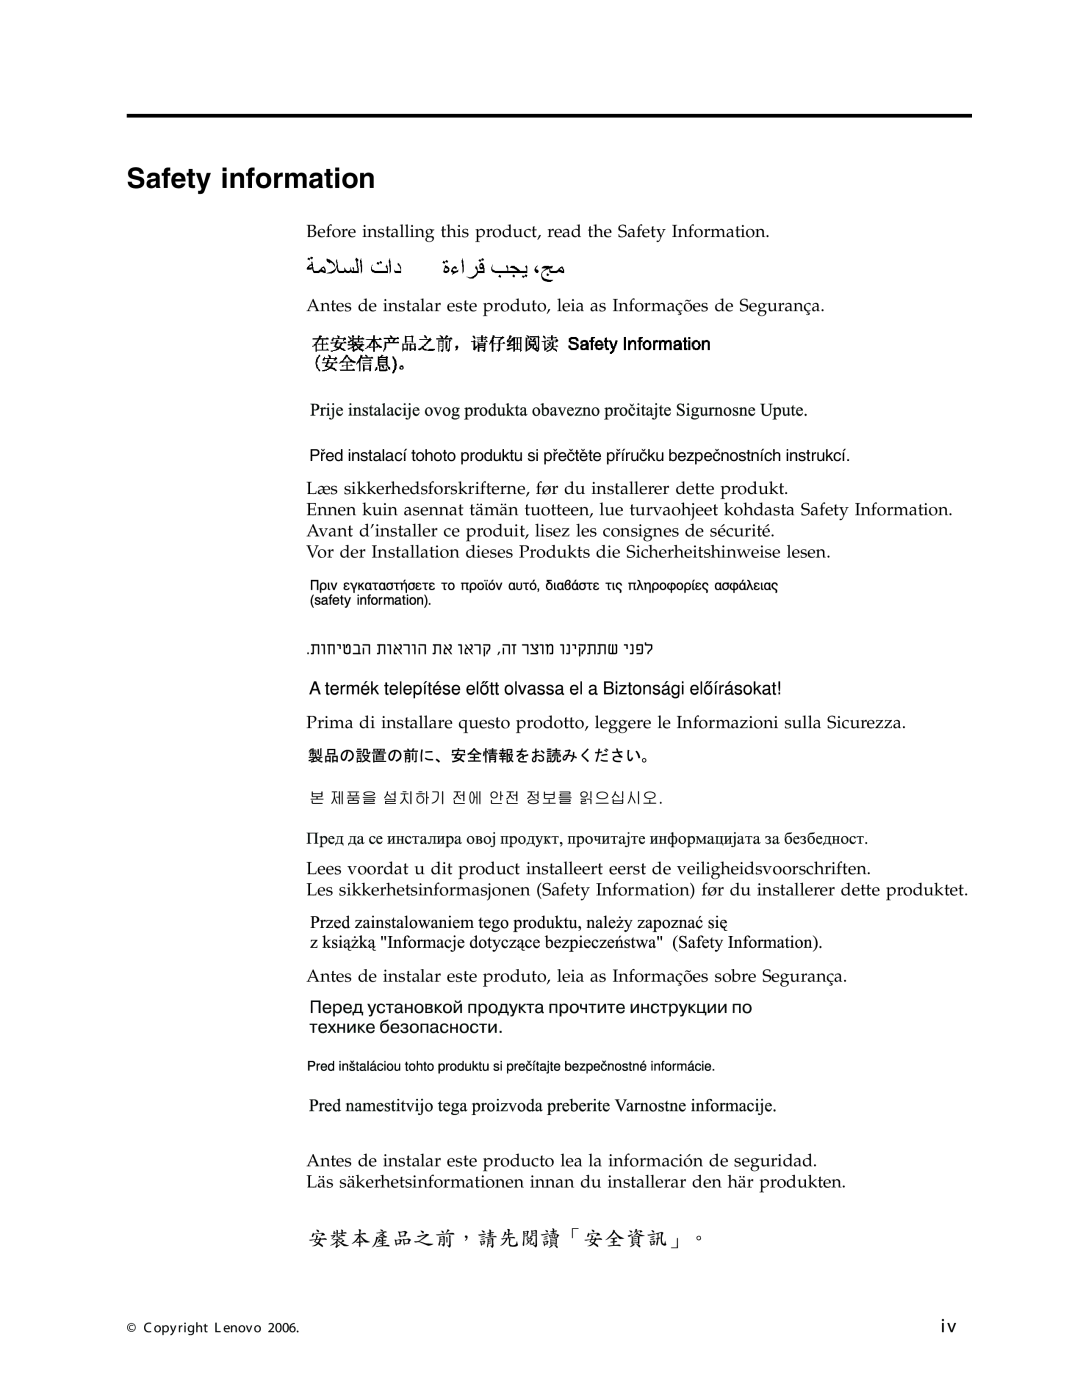 Lenovo L191 manual Safety information 